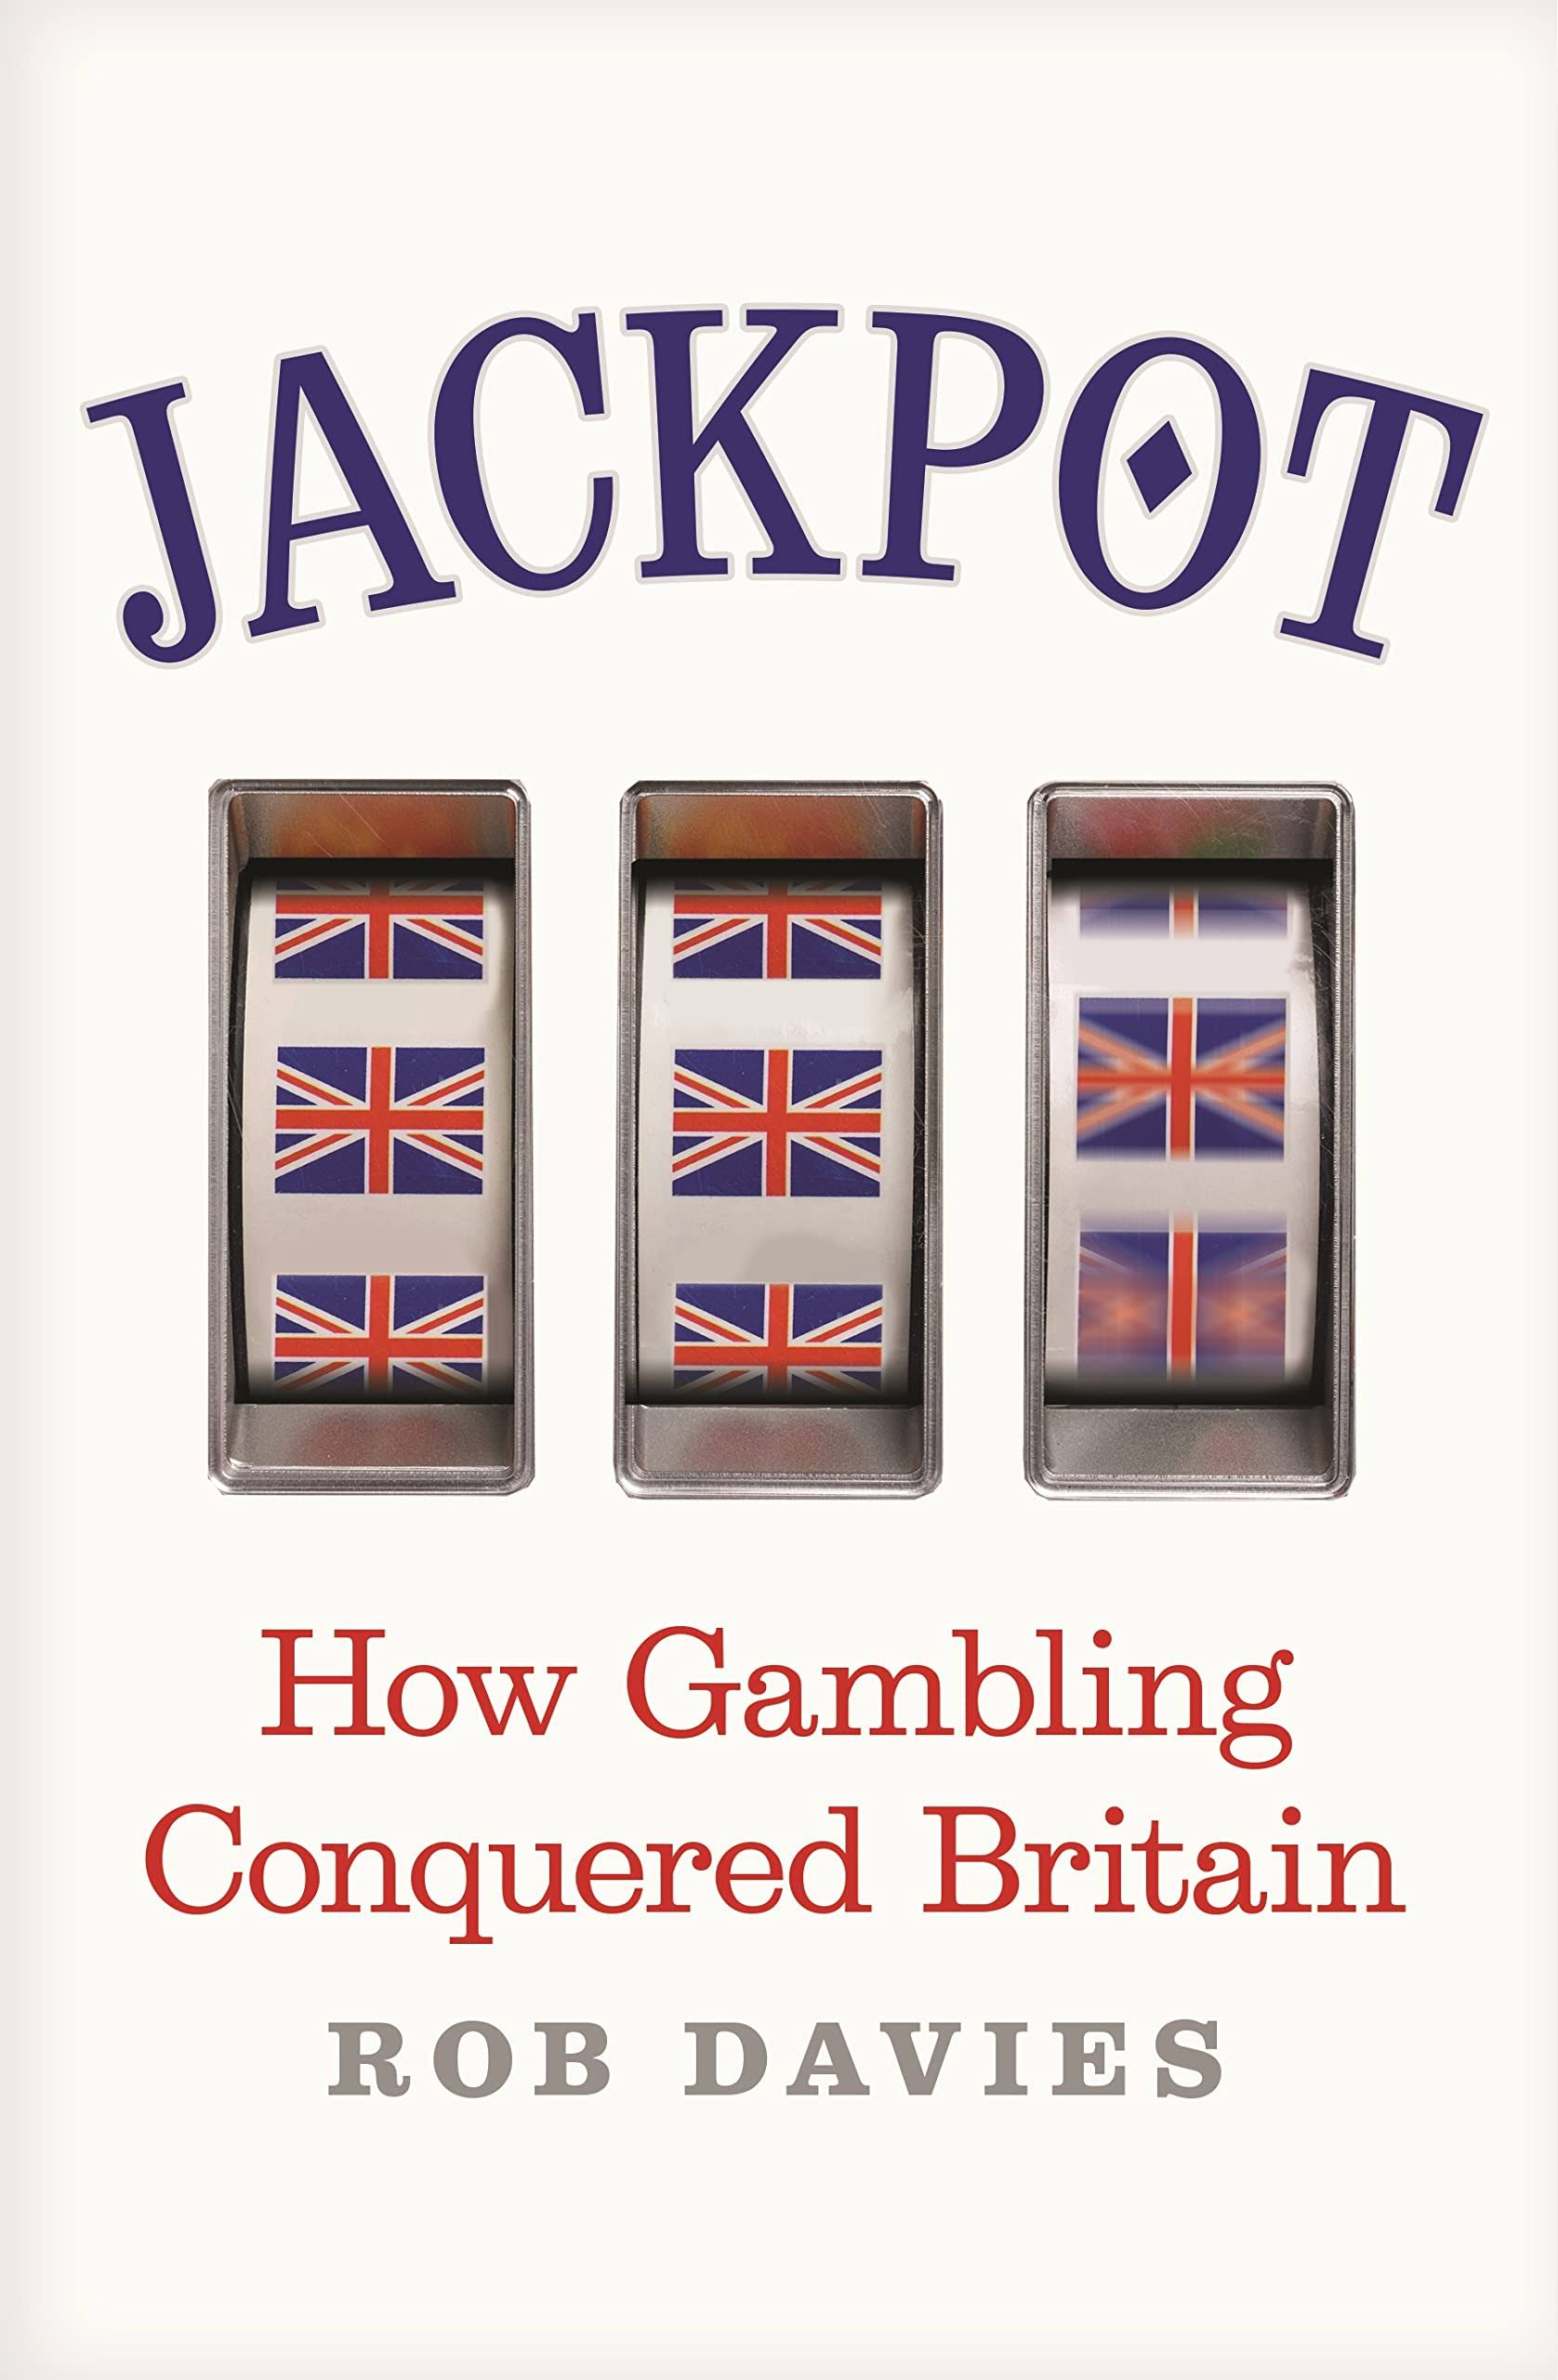 Jackpot: How Gambling Conquered Britain [Book]